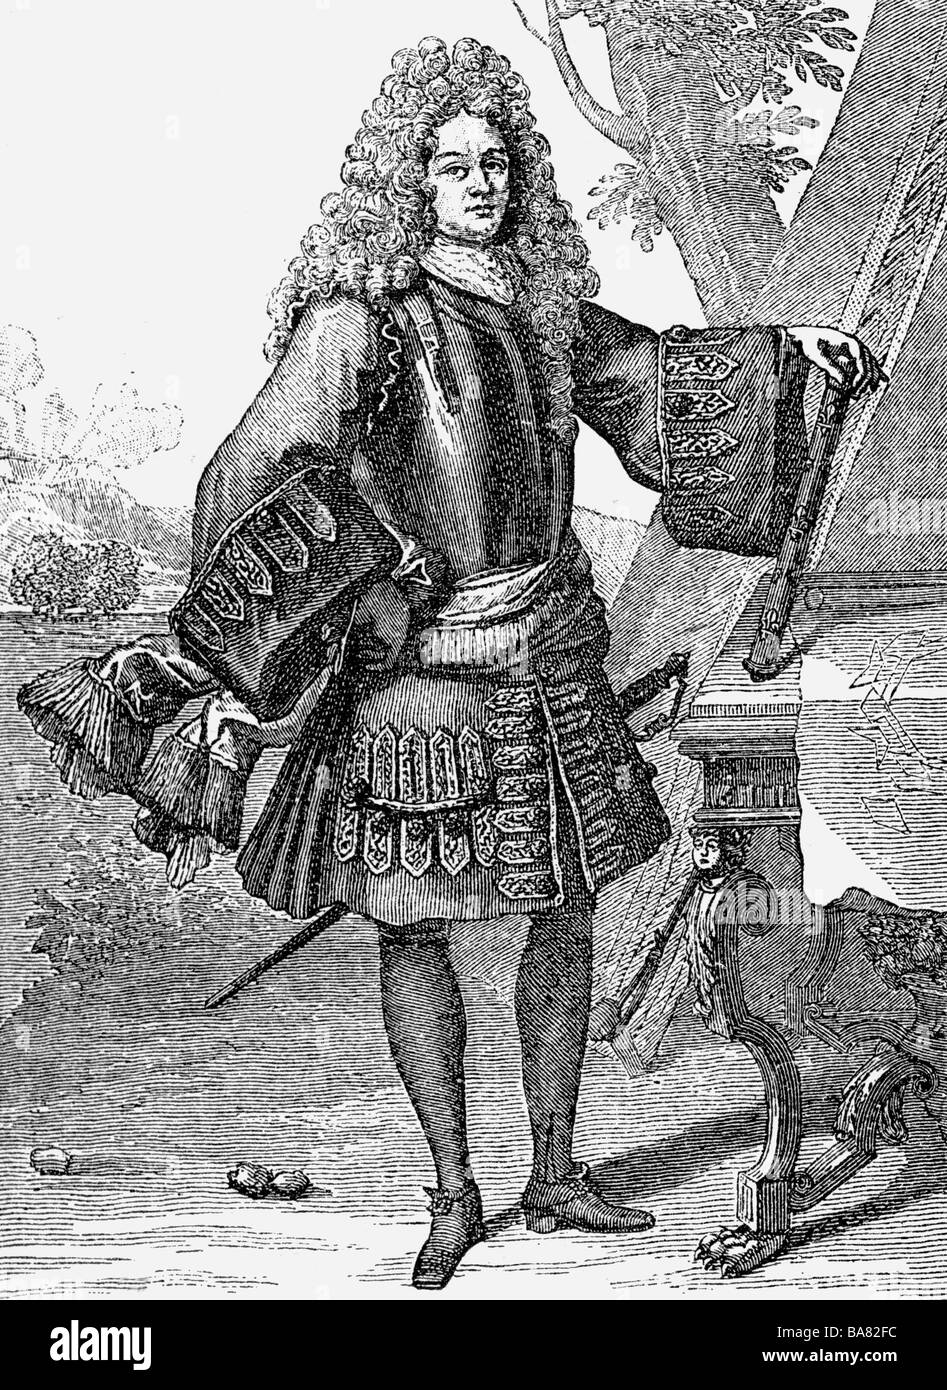 Vauban, Sebastien le Prestre de, 1.5.1633 - 30.3.1707, French general, full length, wood engraving, 19th century, , Stock Photo